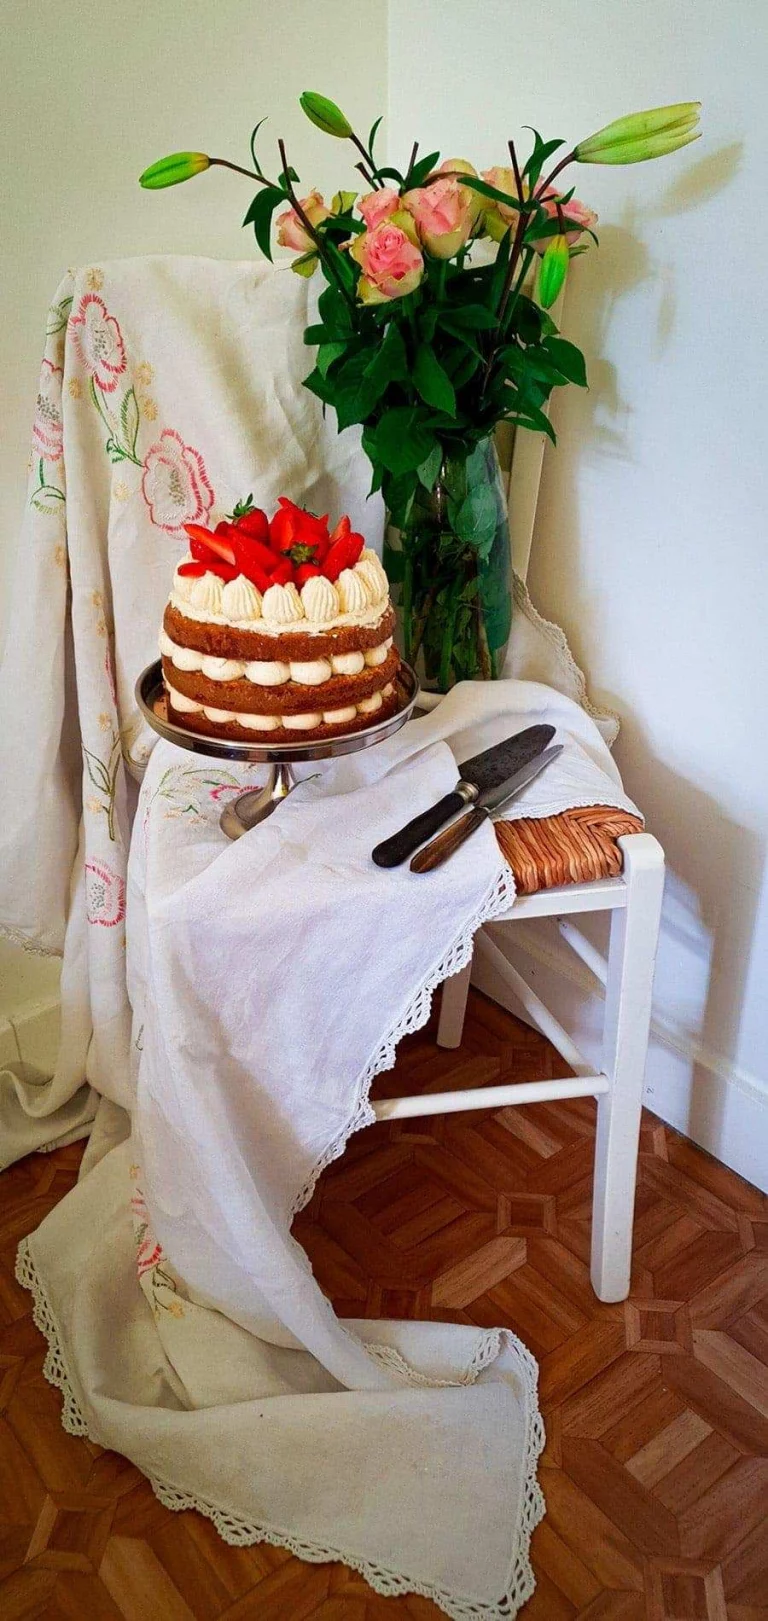 La Petite main strawberry and tea cake paris